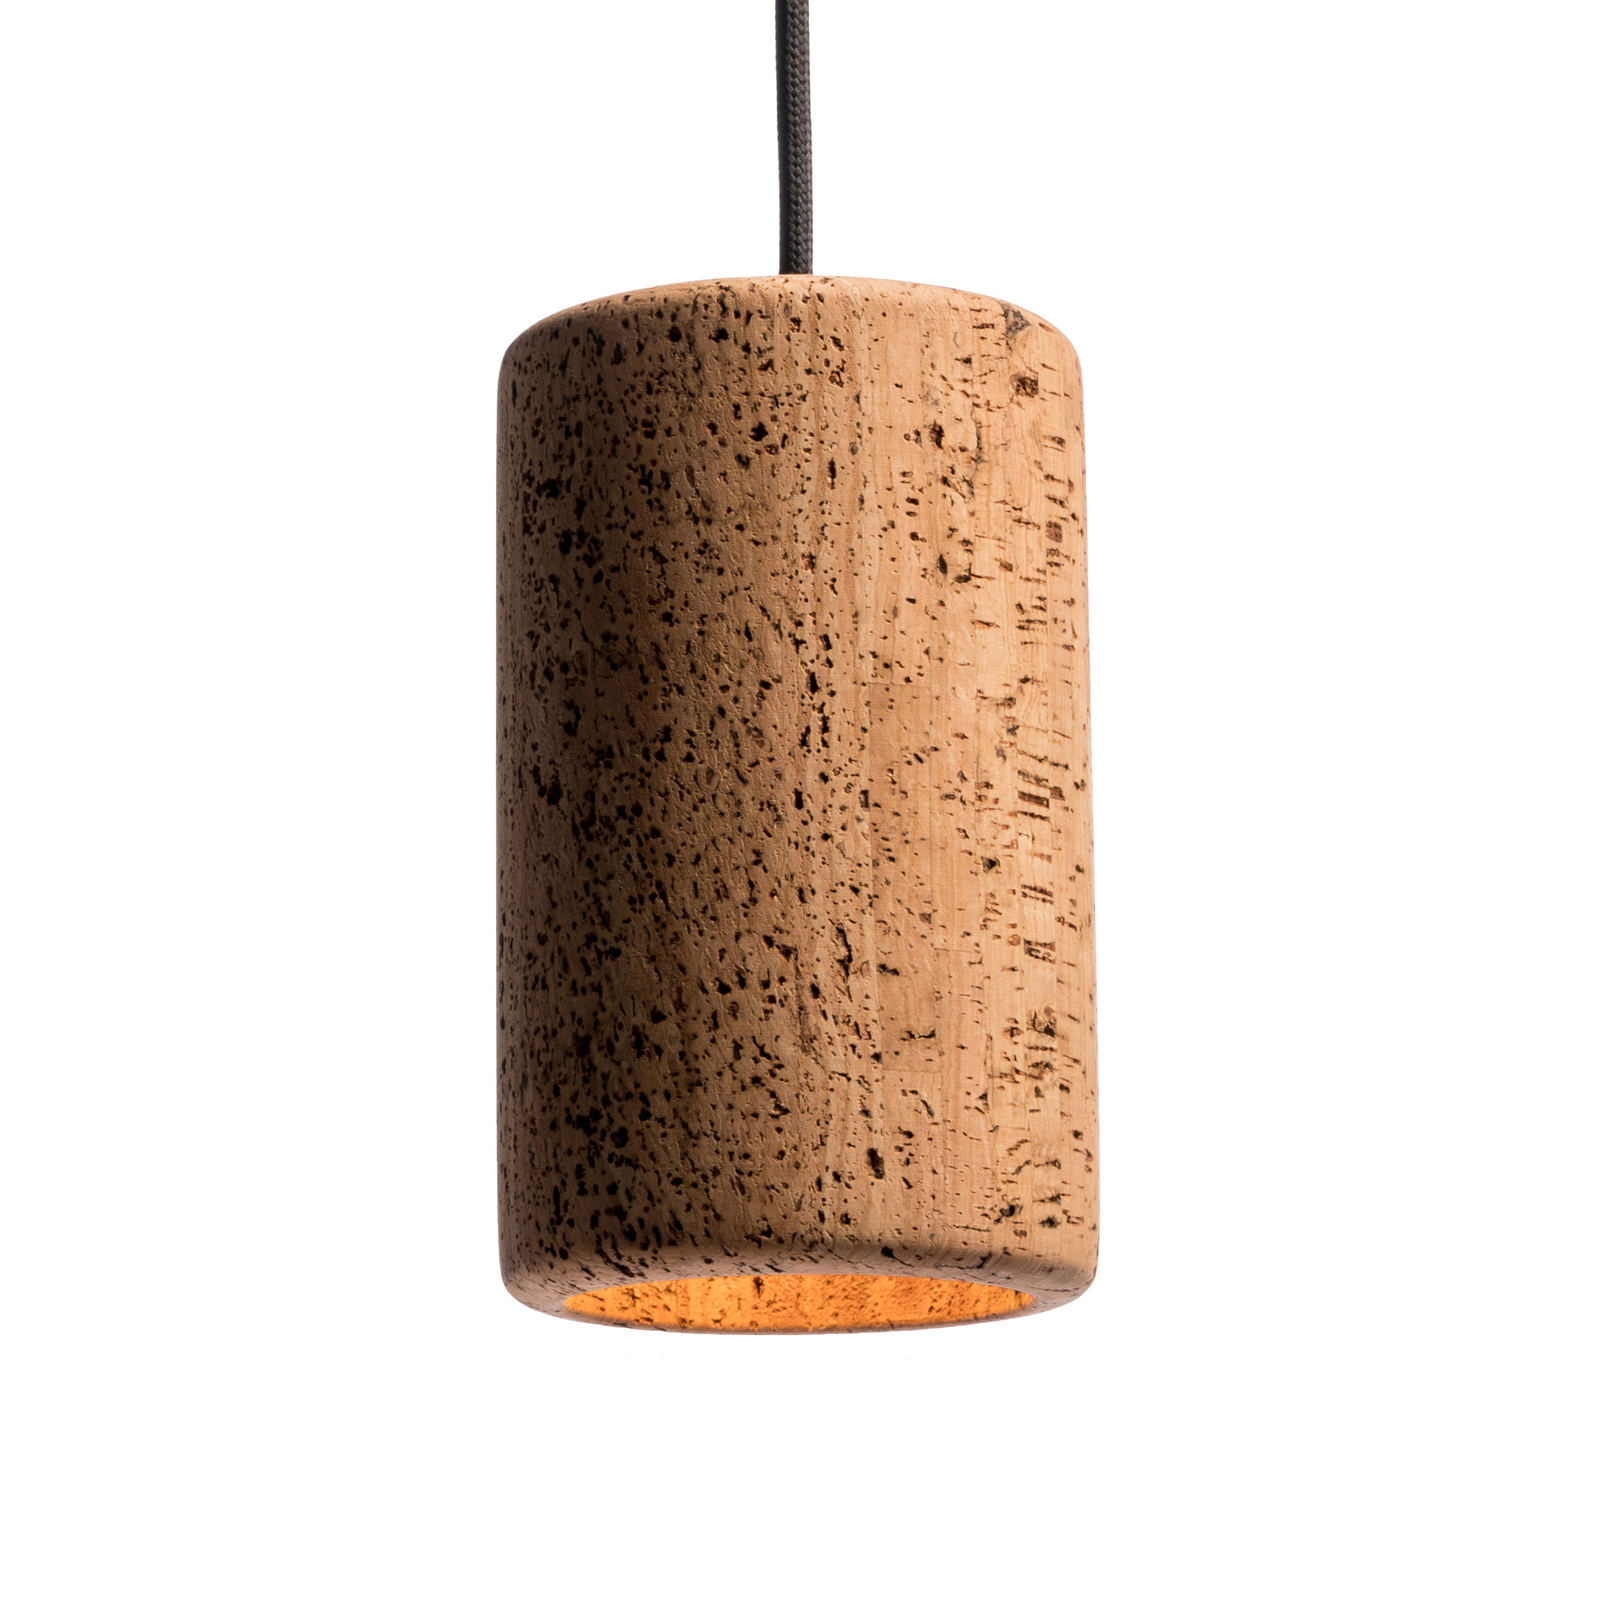 Porto S hanging light, made of cork, Ø 11 cm